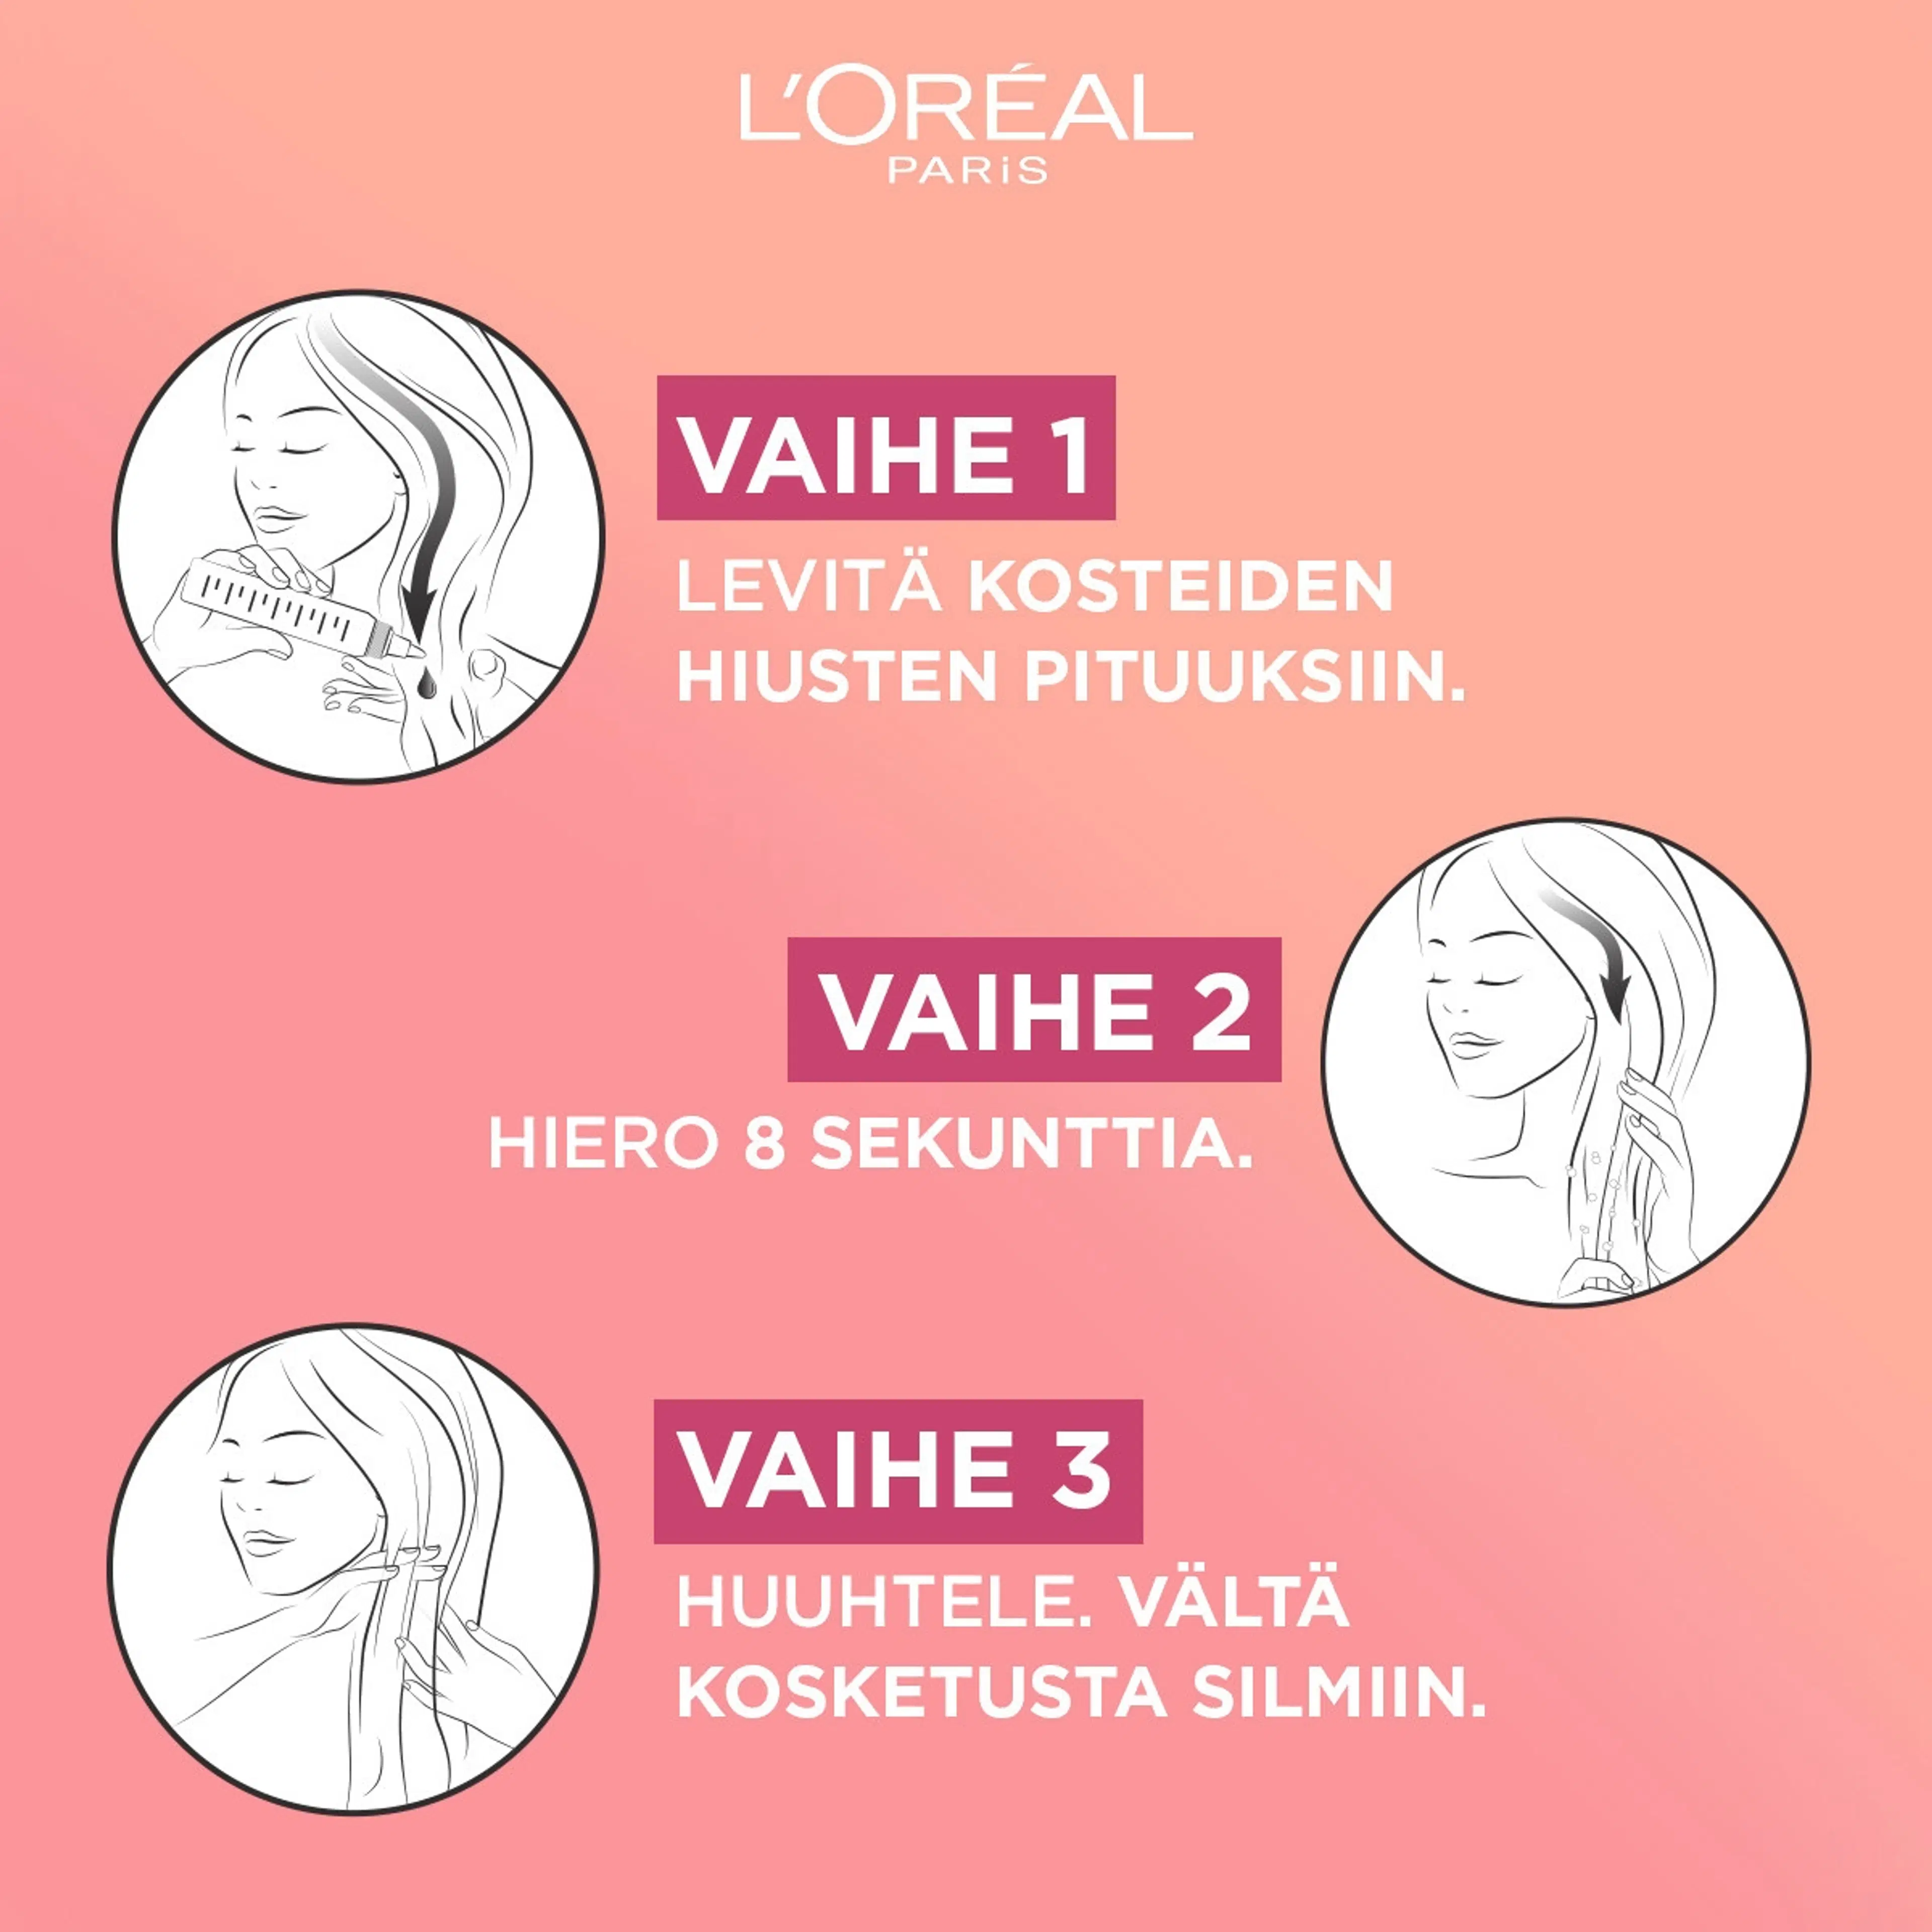 L'Oréal Paris Elvital Dream Length 8 Second Wonder Water lamellar- käsittely pitkille hiuksille 200ml